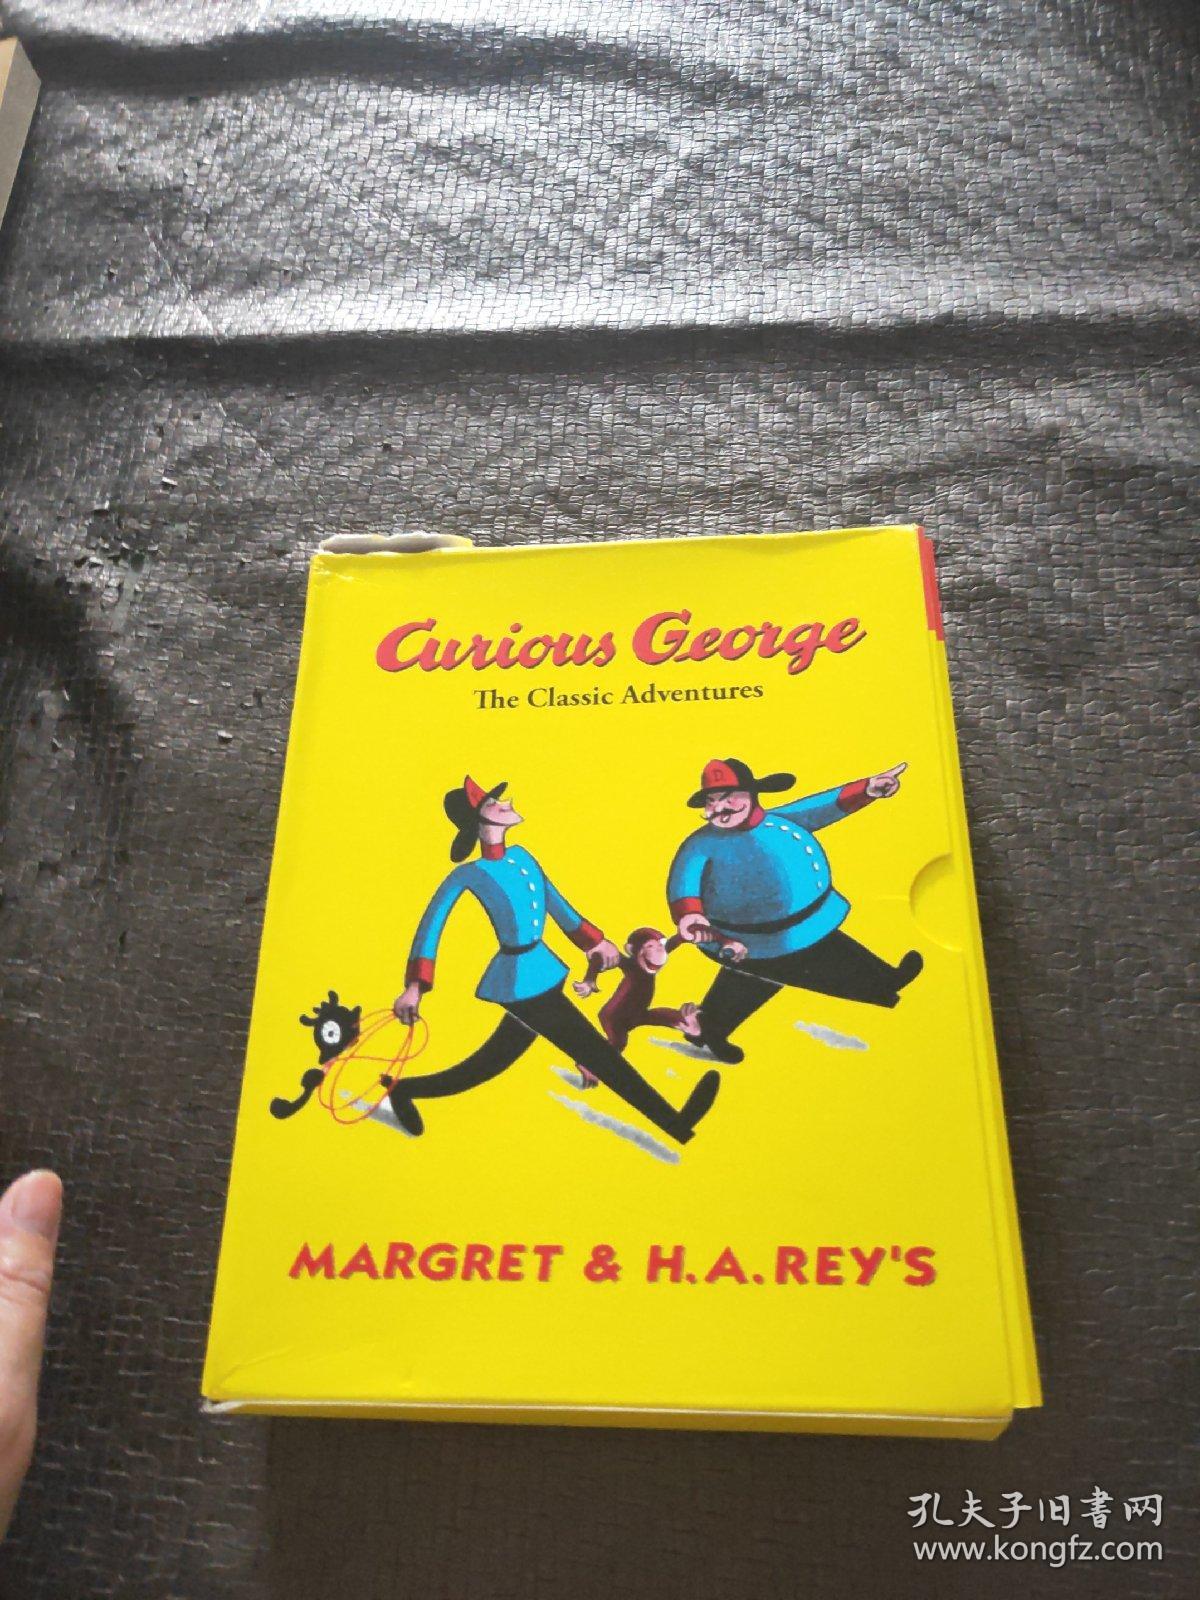 Curious George Classic Adventures #3 (8 books) 好奇猴乔治-原书典藏版第三辑（共8册）_孔夫子旧书网